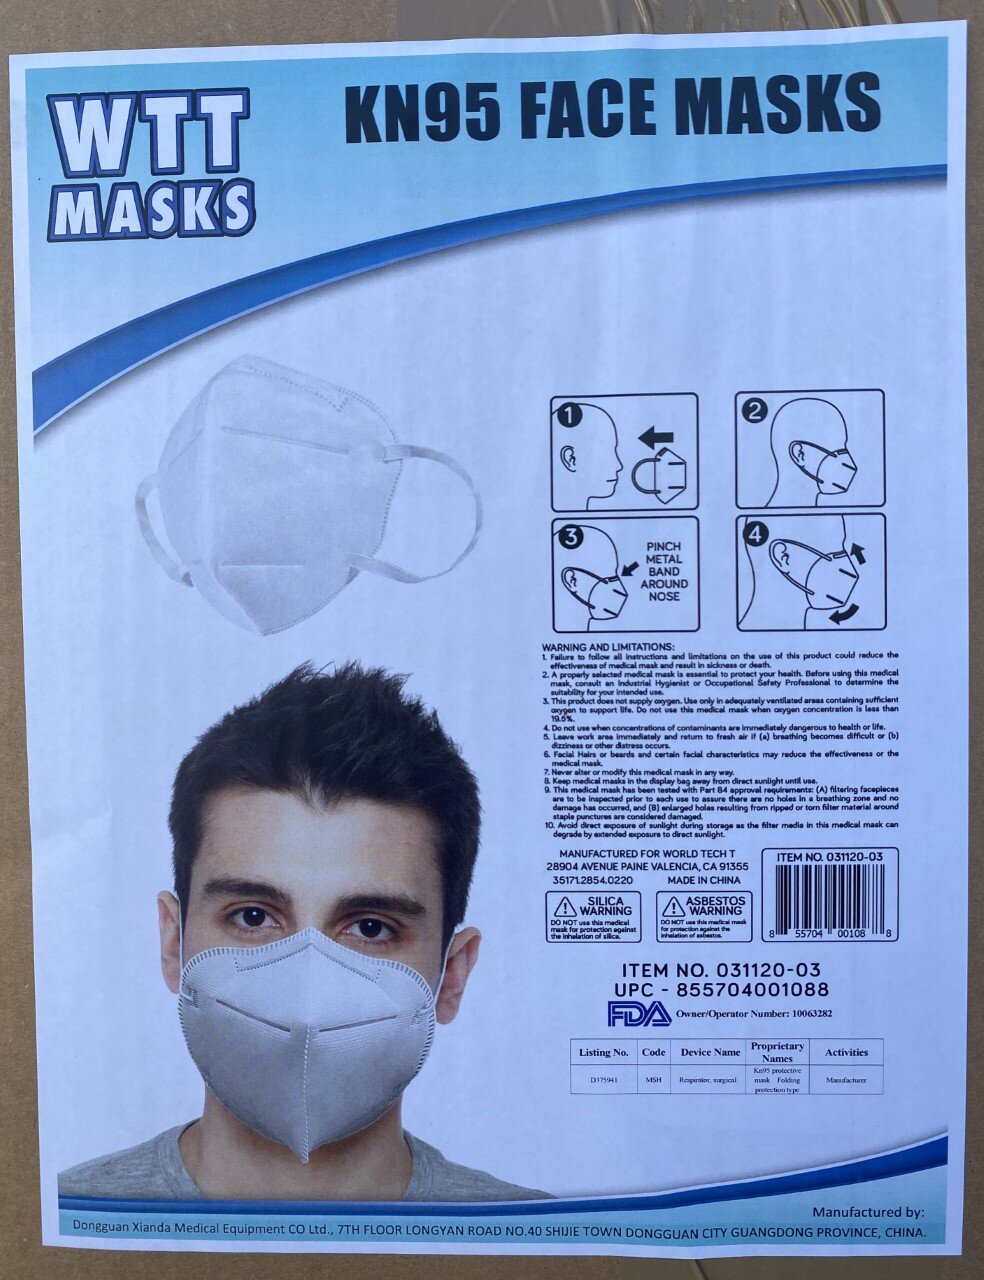 Mask Information.jpg